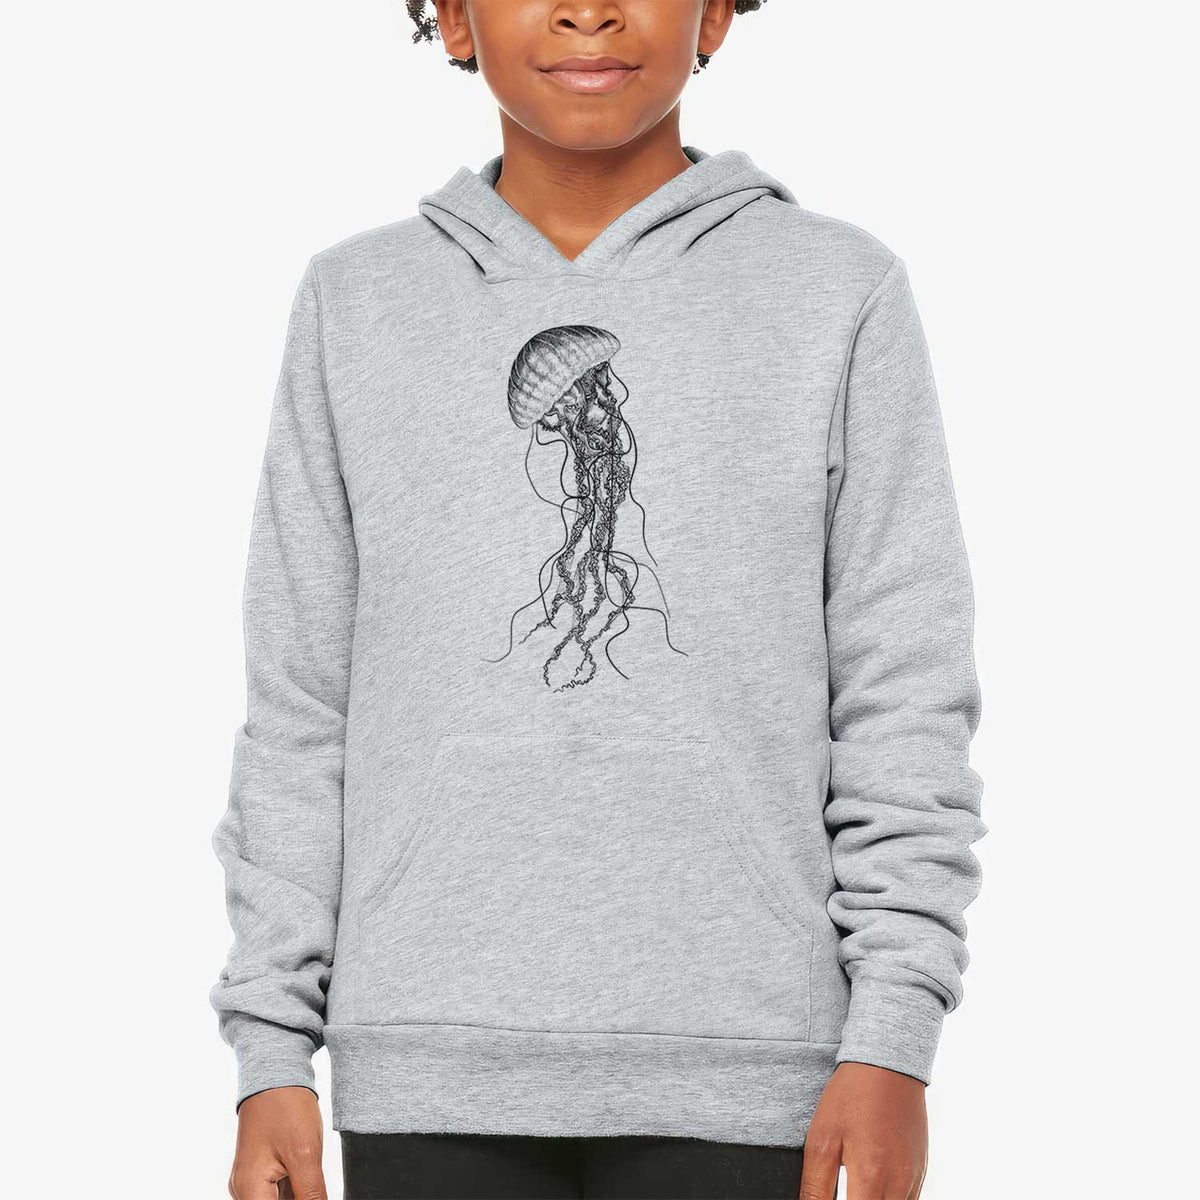 Black Sea Nettle Jellyfish - Chrysaora achlyos - Youth Hoodie Sweatshirt